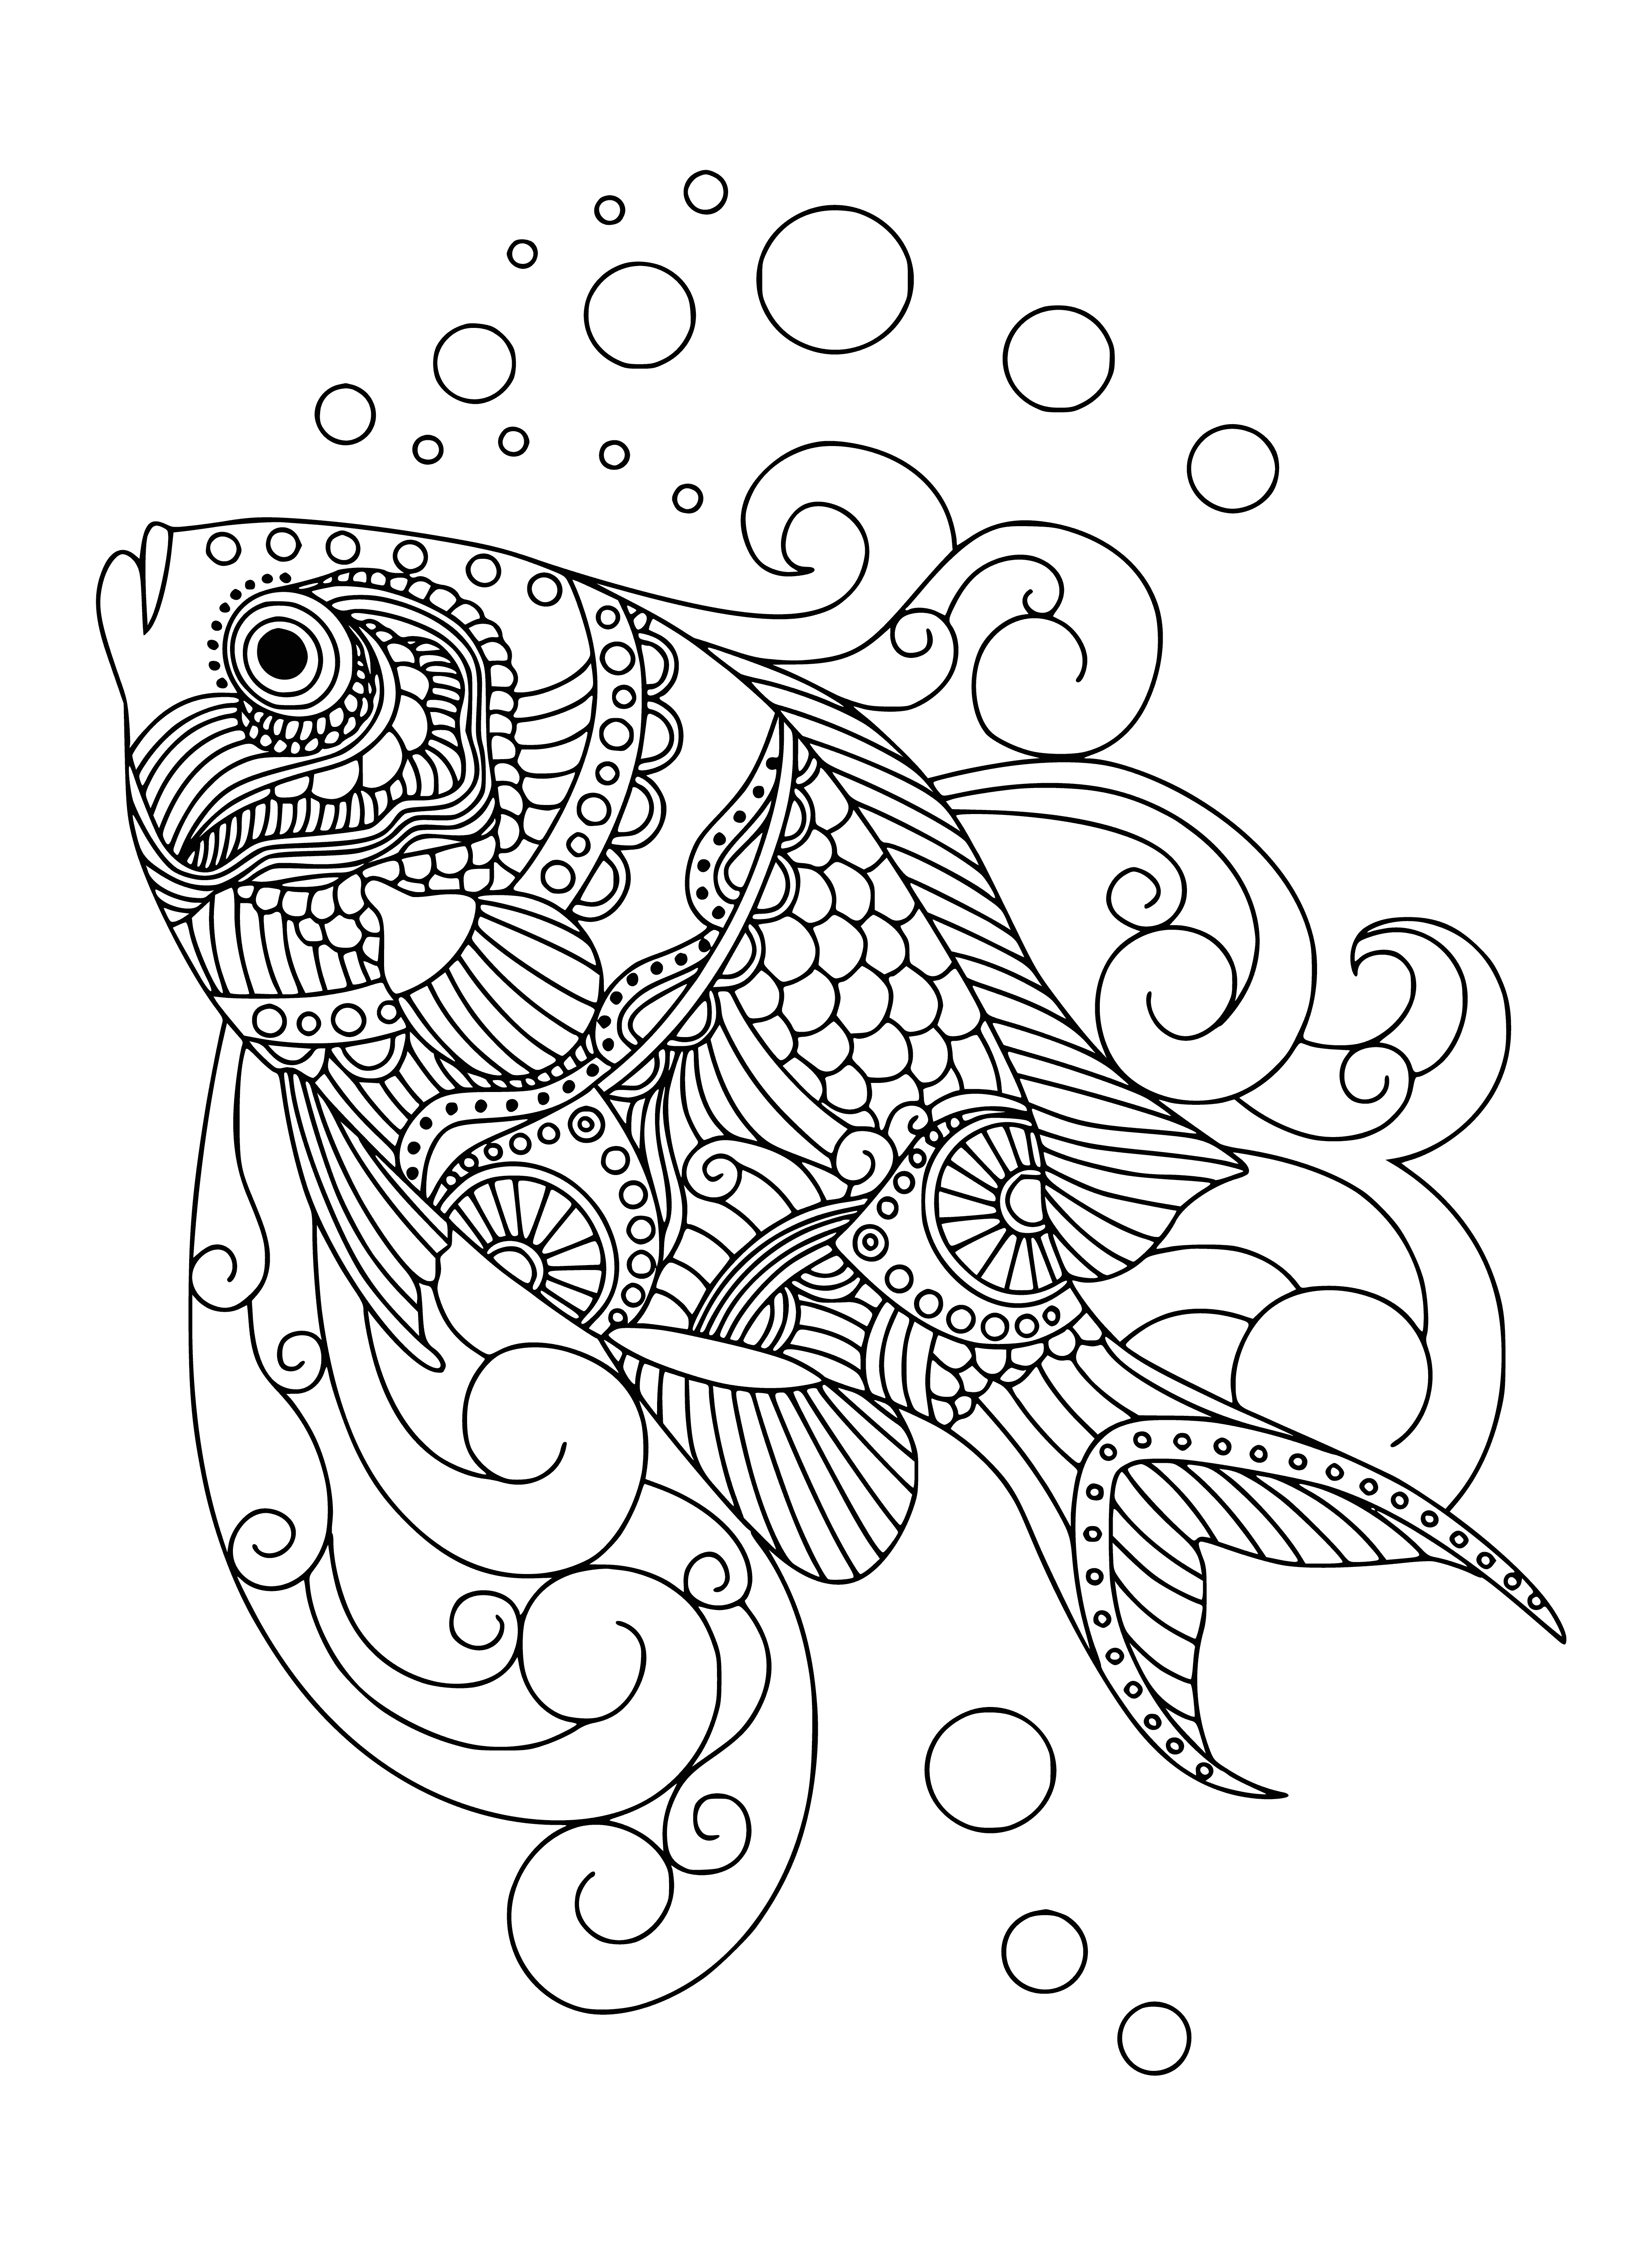 Mała ryba kolorowanka